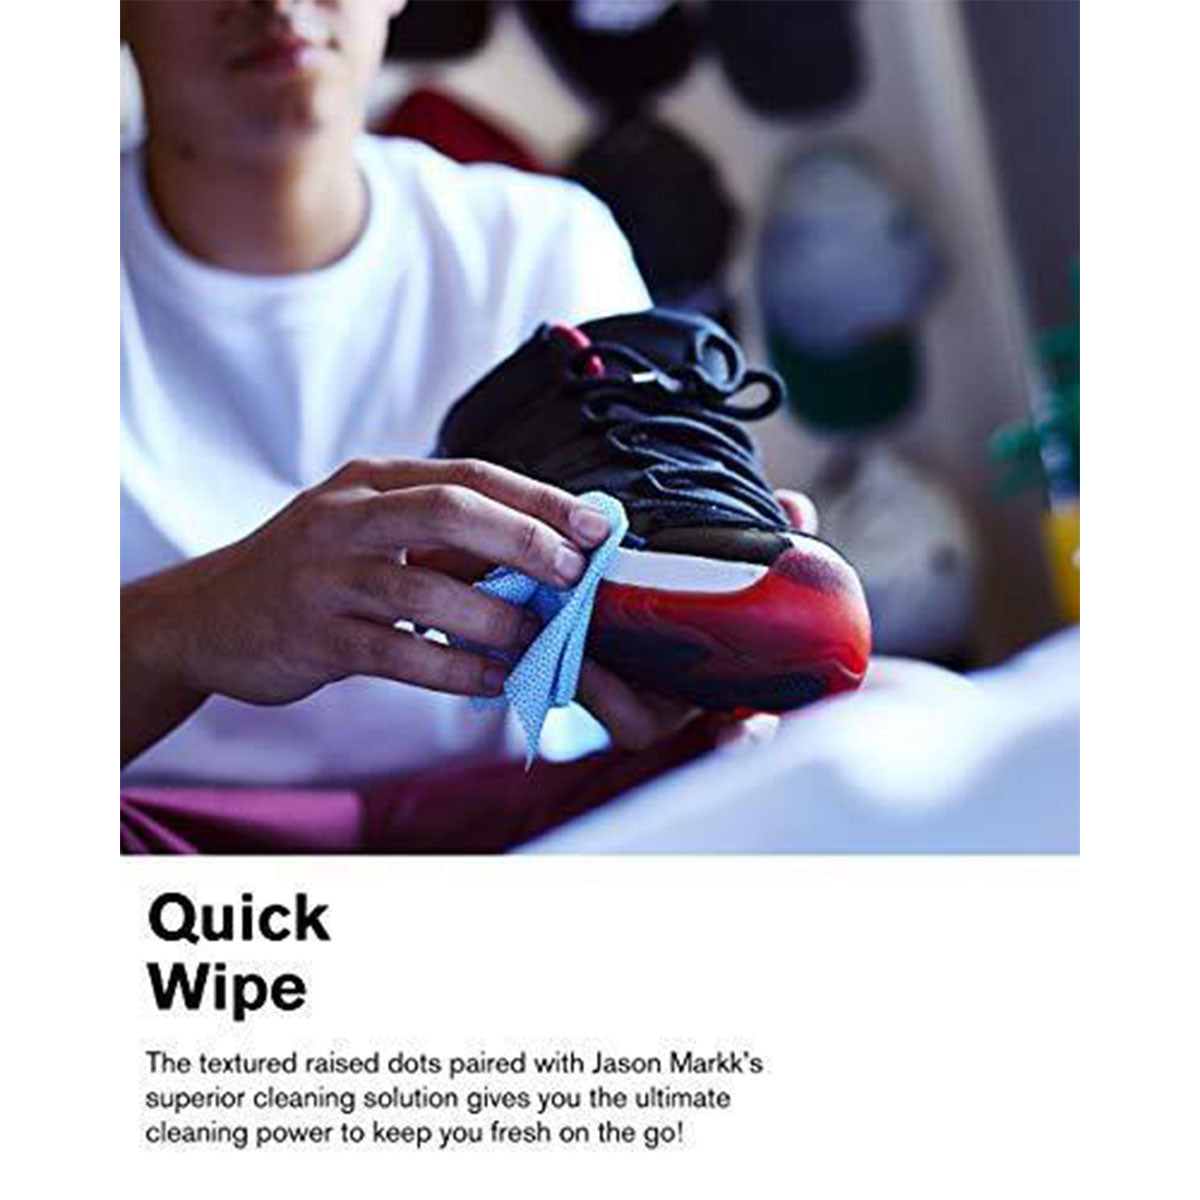 Kit de Cuidados para el Calzado "Starter Set" - Limpiadores de Calzado Jason Markk